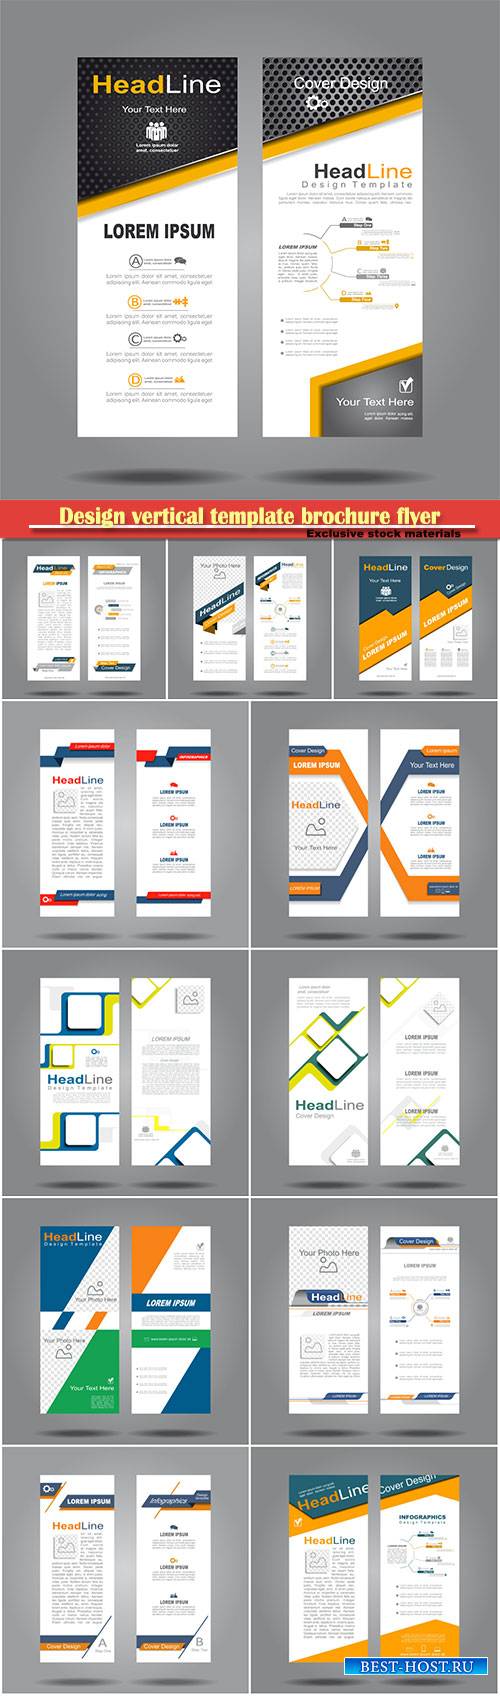 Design vertical template brochure flyer vector banner